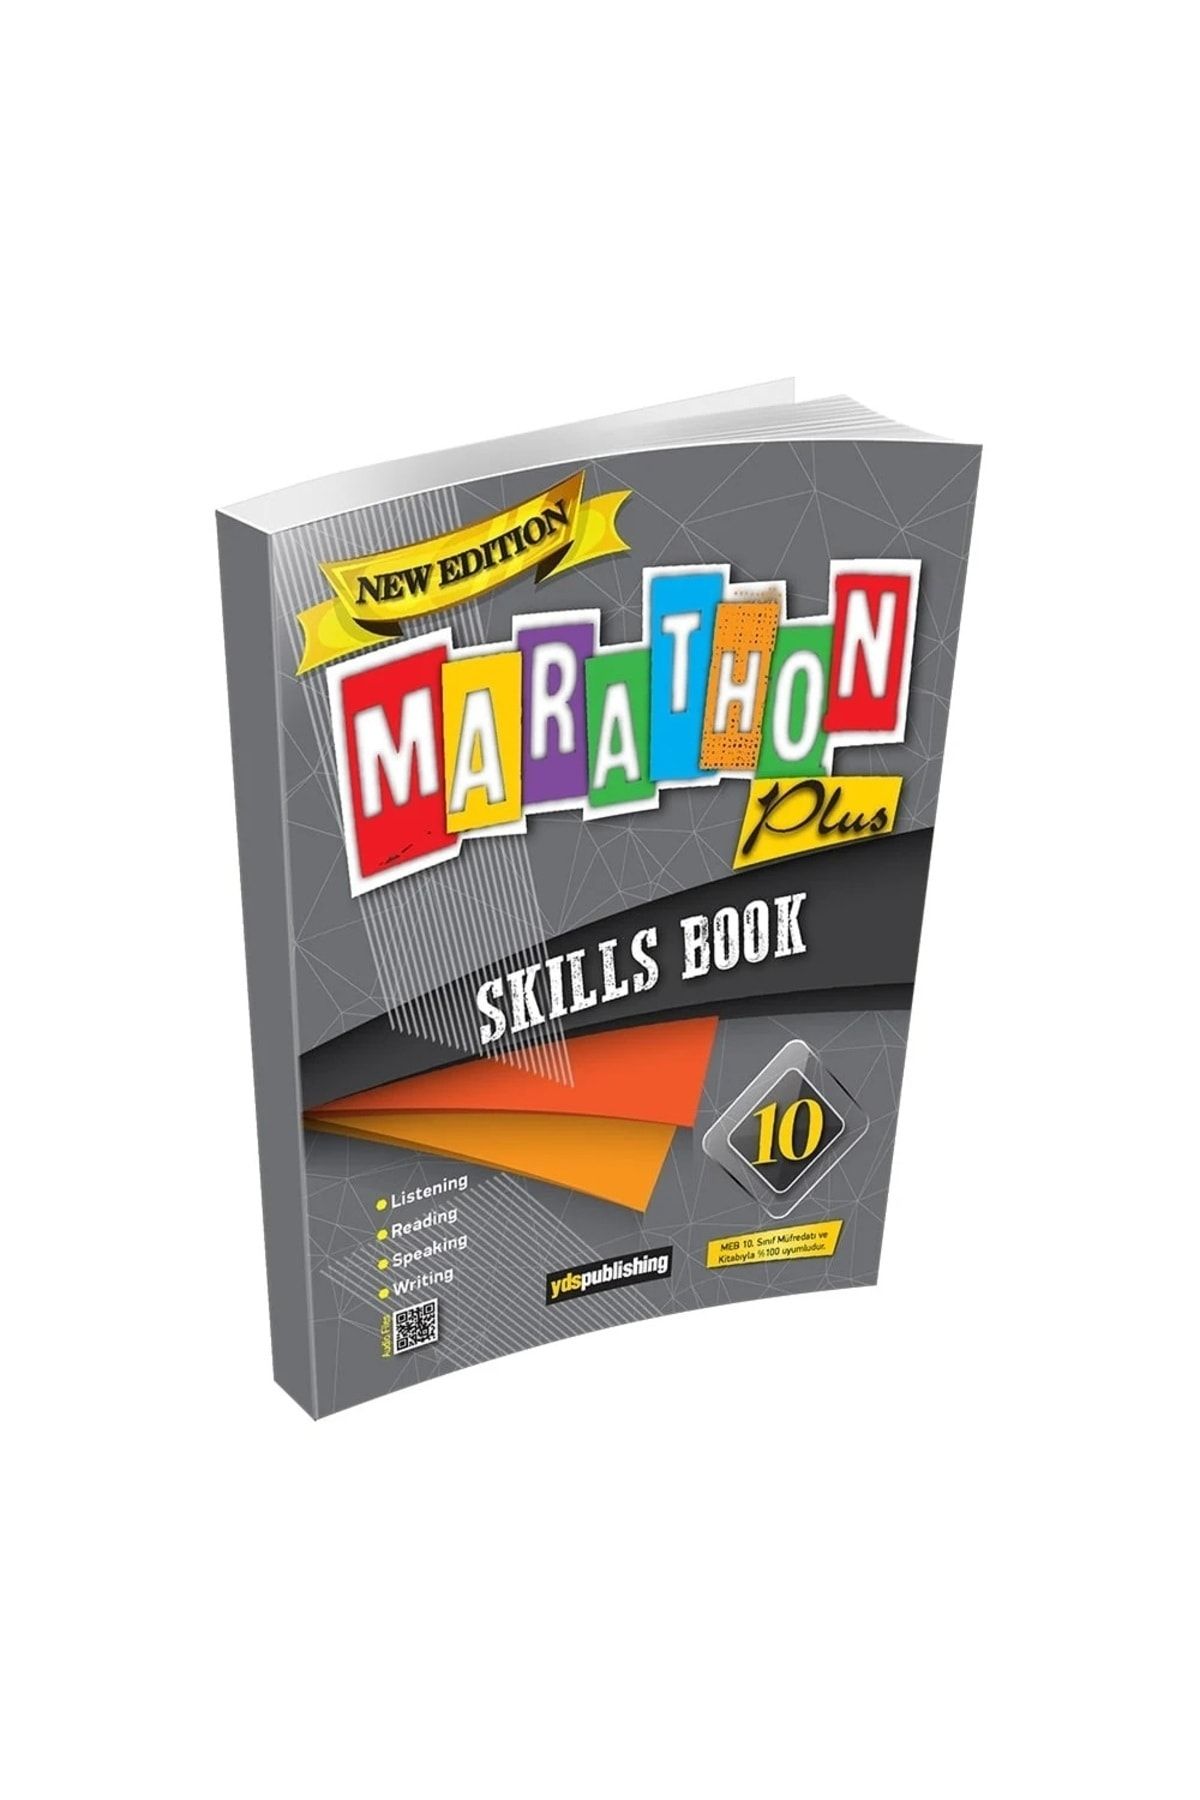 yds publishing New Edition Marathon Plus 10 Skills Book